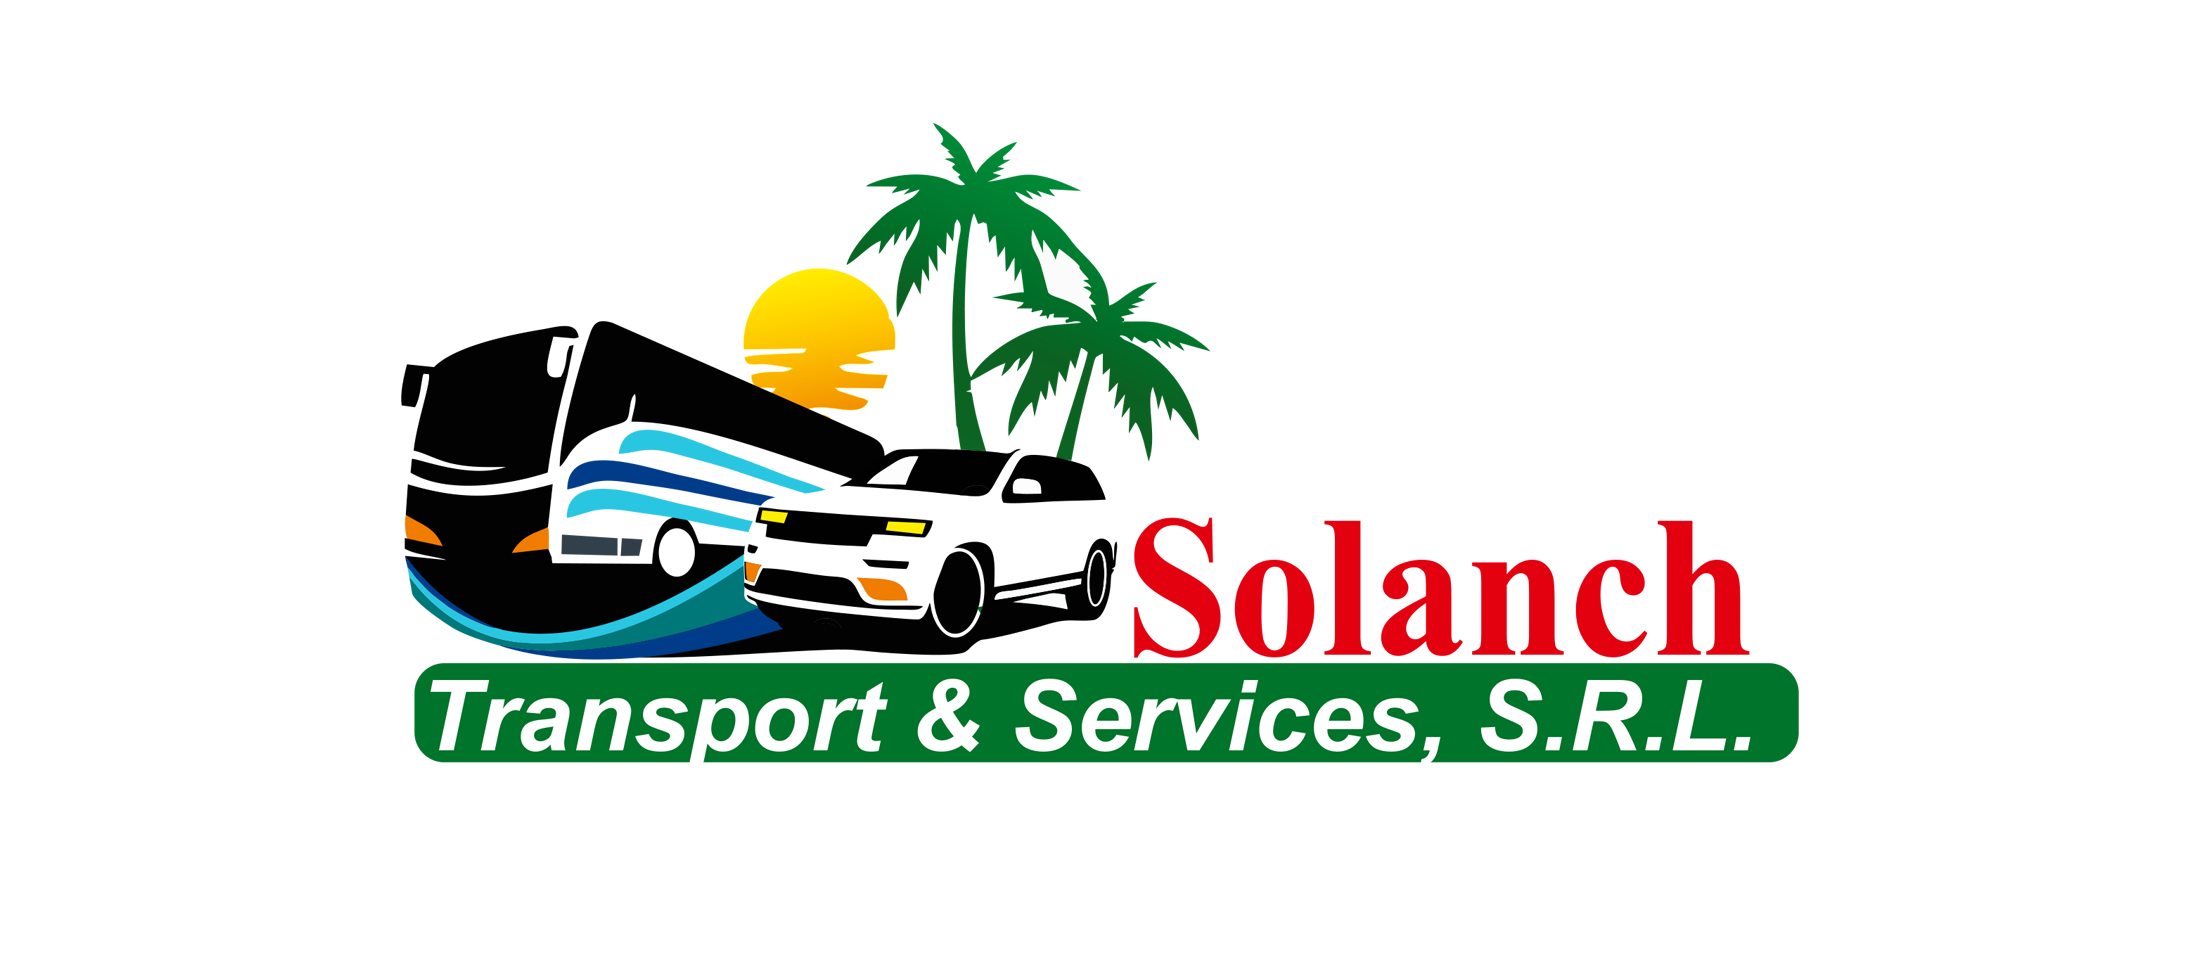 Solanch Transport & Services logo